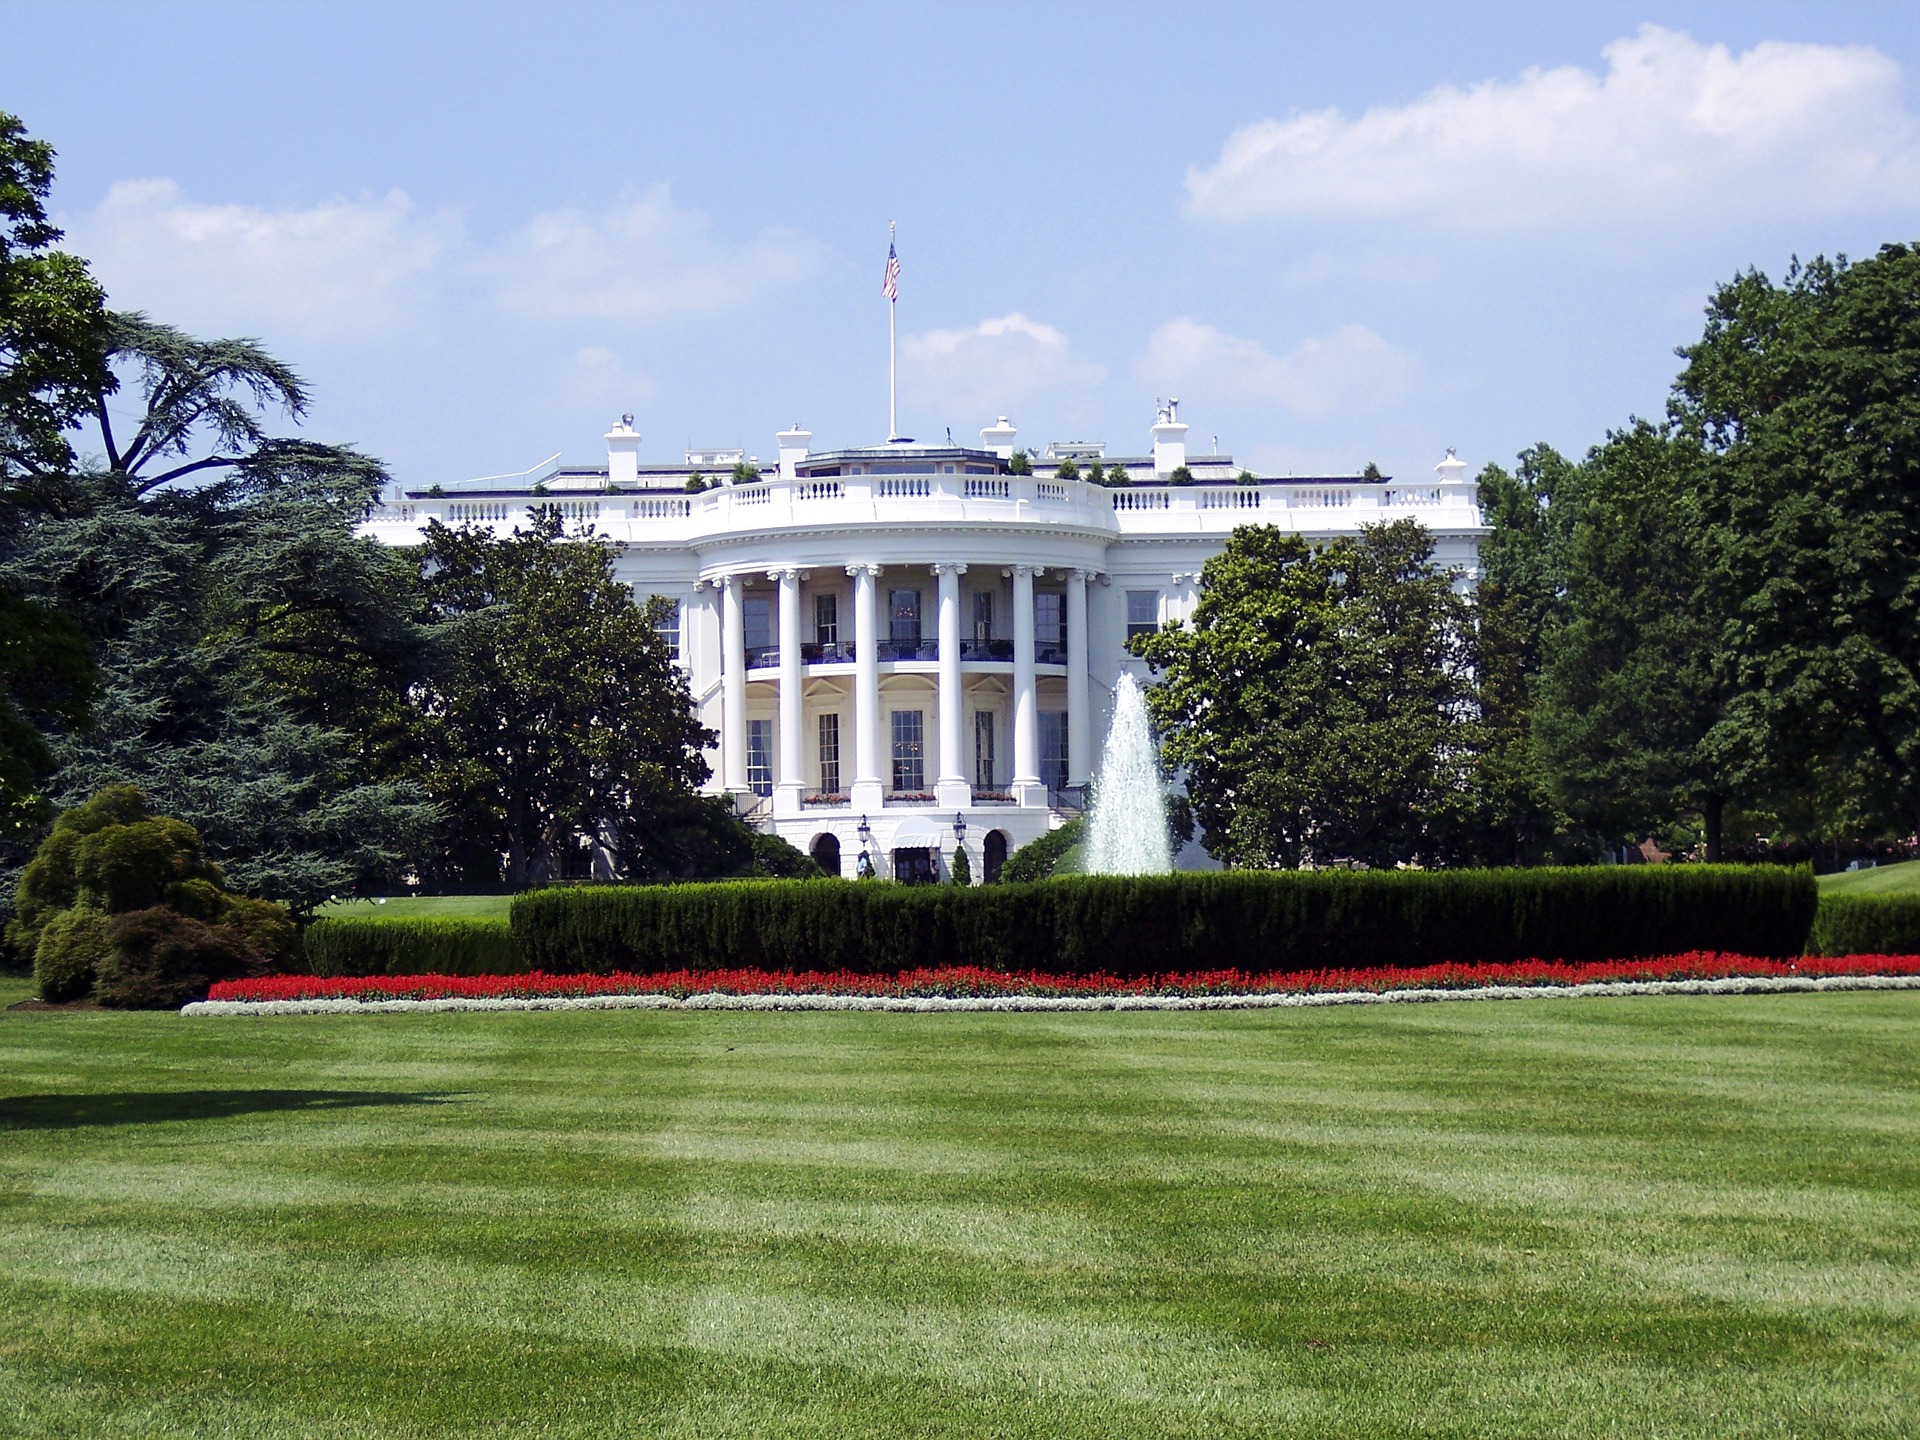 The White House in Washington, D.C. Public Domain.